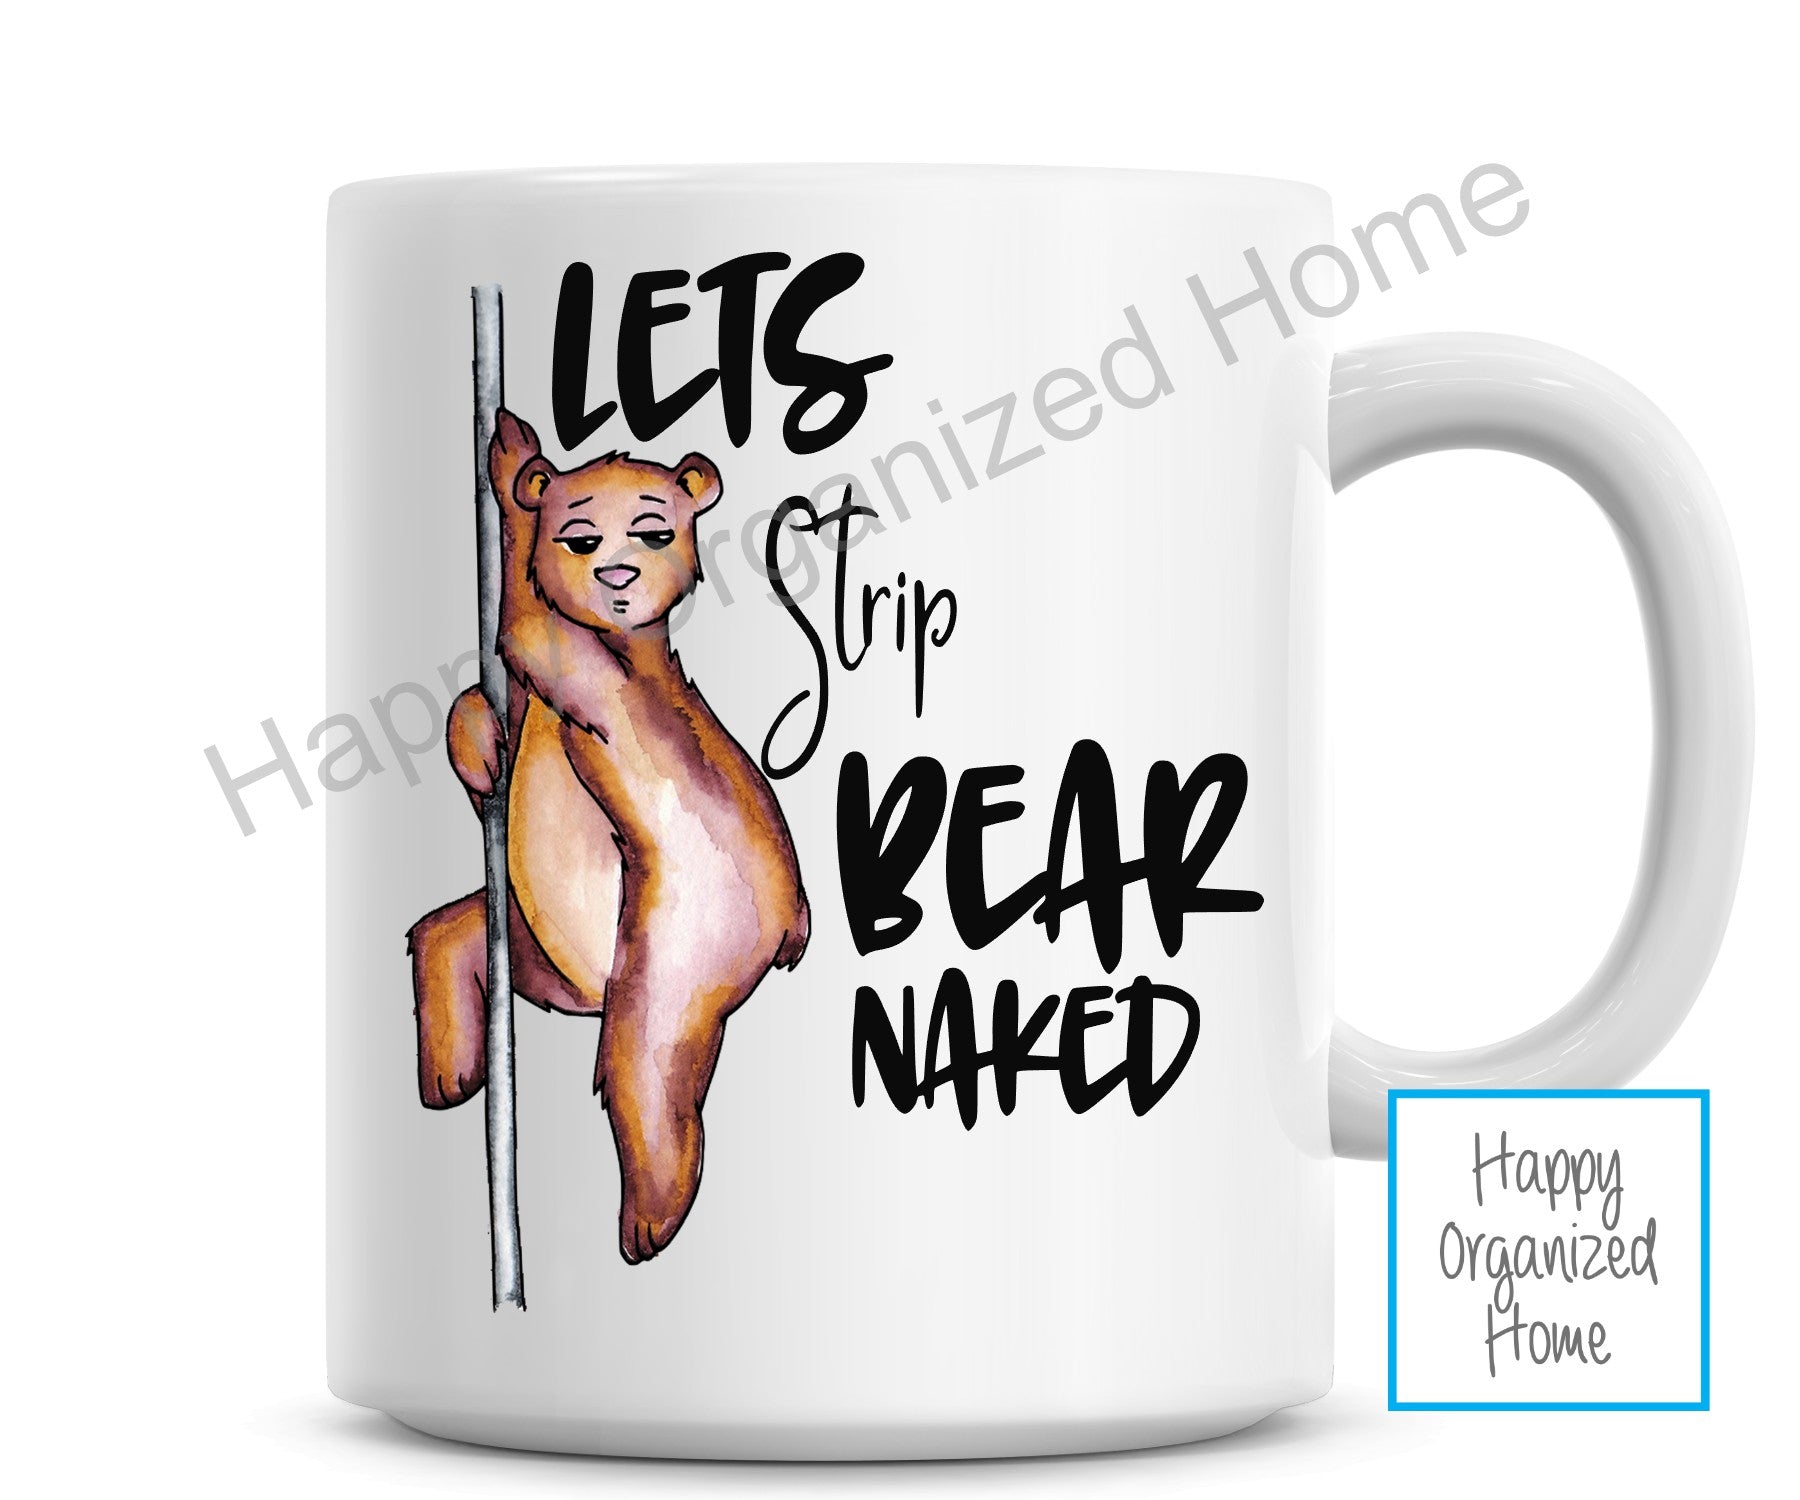 Let's strip bear naked - mug